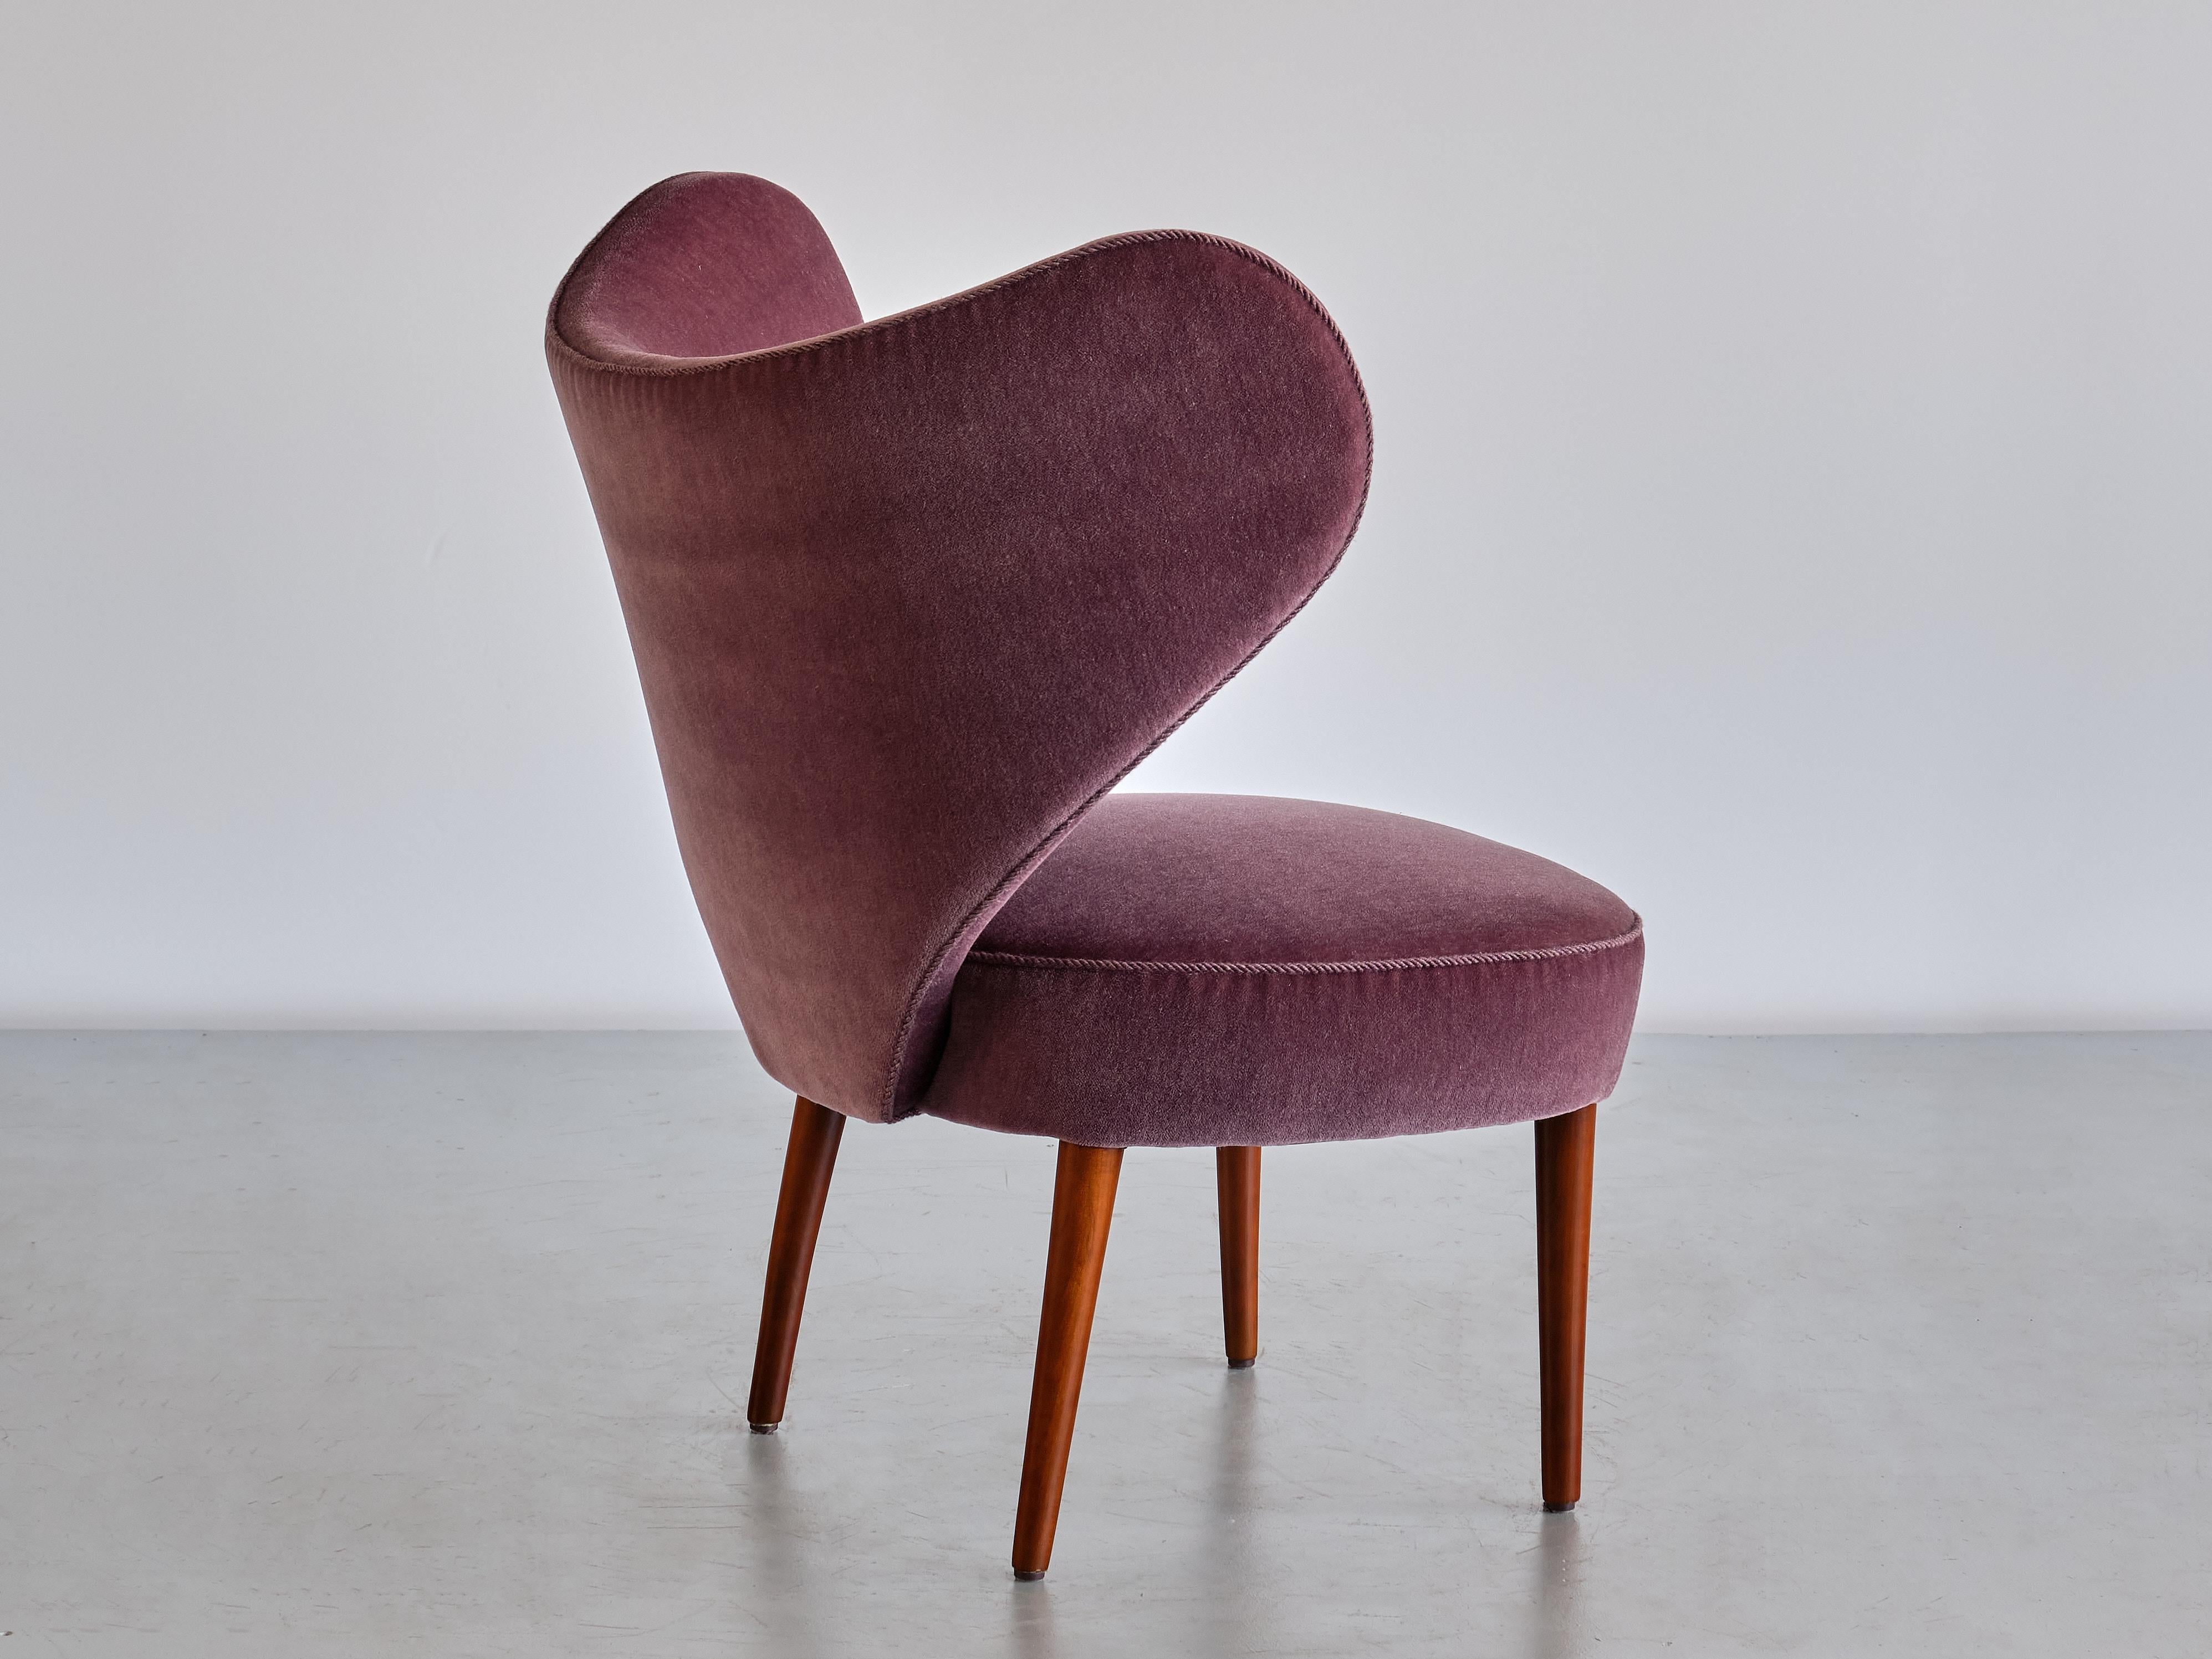 Exceptional 'Heart' Chair in Purple Mohair, Brøndbyøster Møbel, Denmark, 1953 For Sale 3